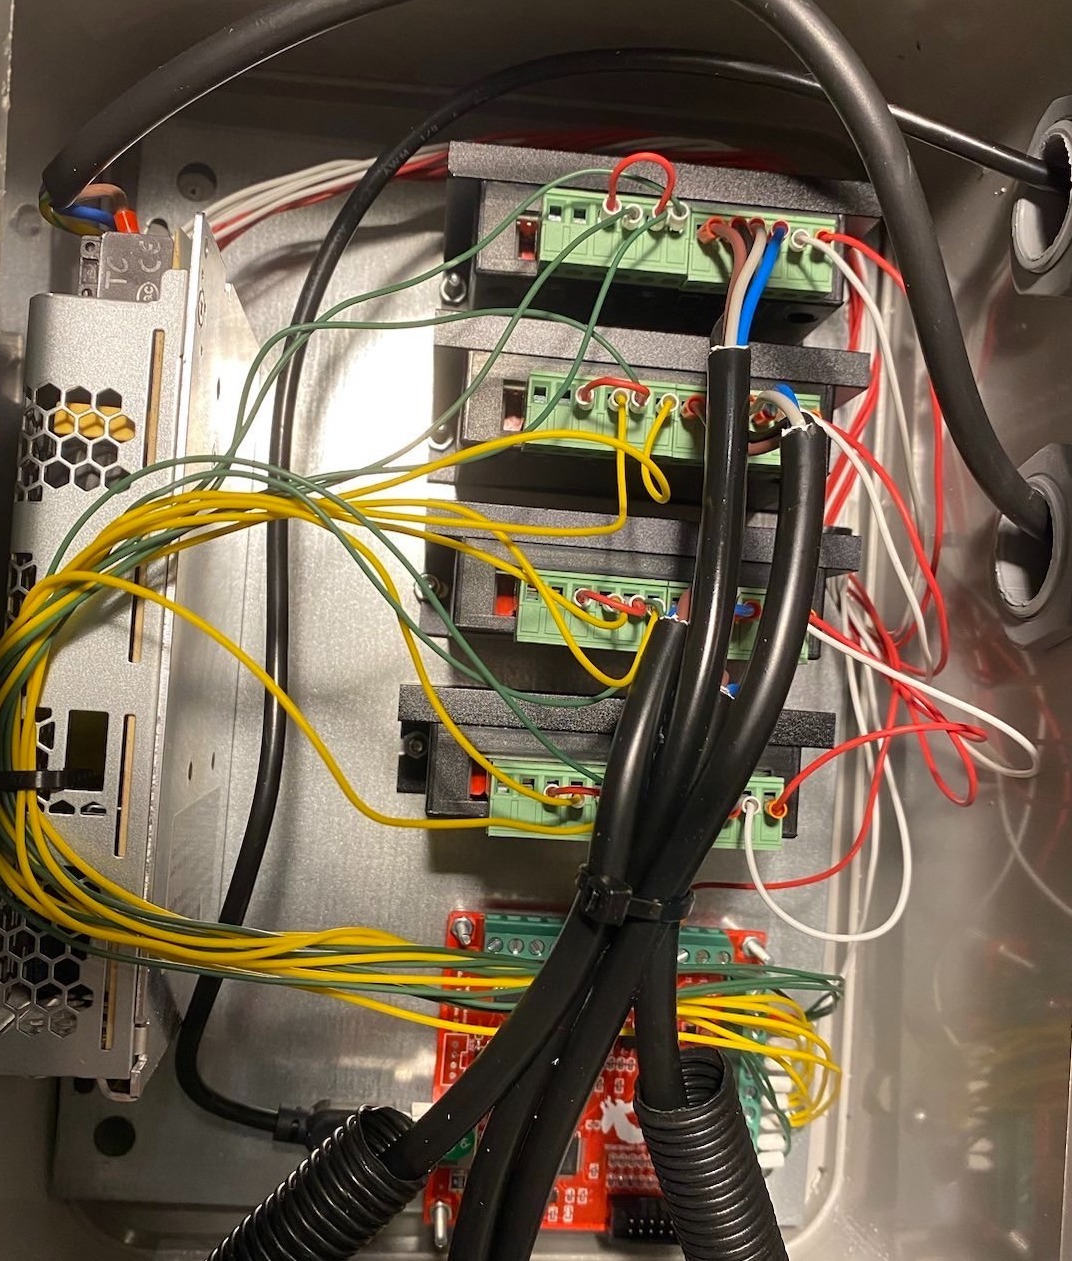 Inside the original cramped CNC router control box.